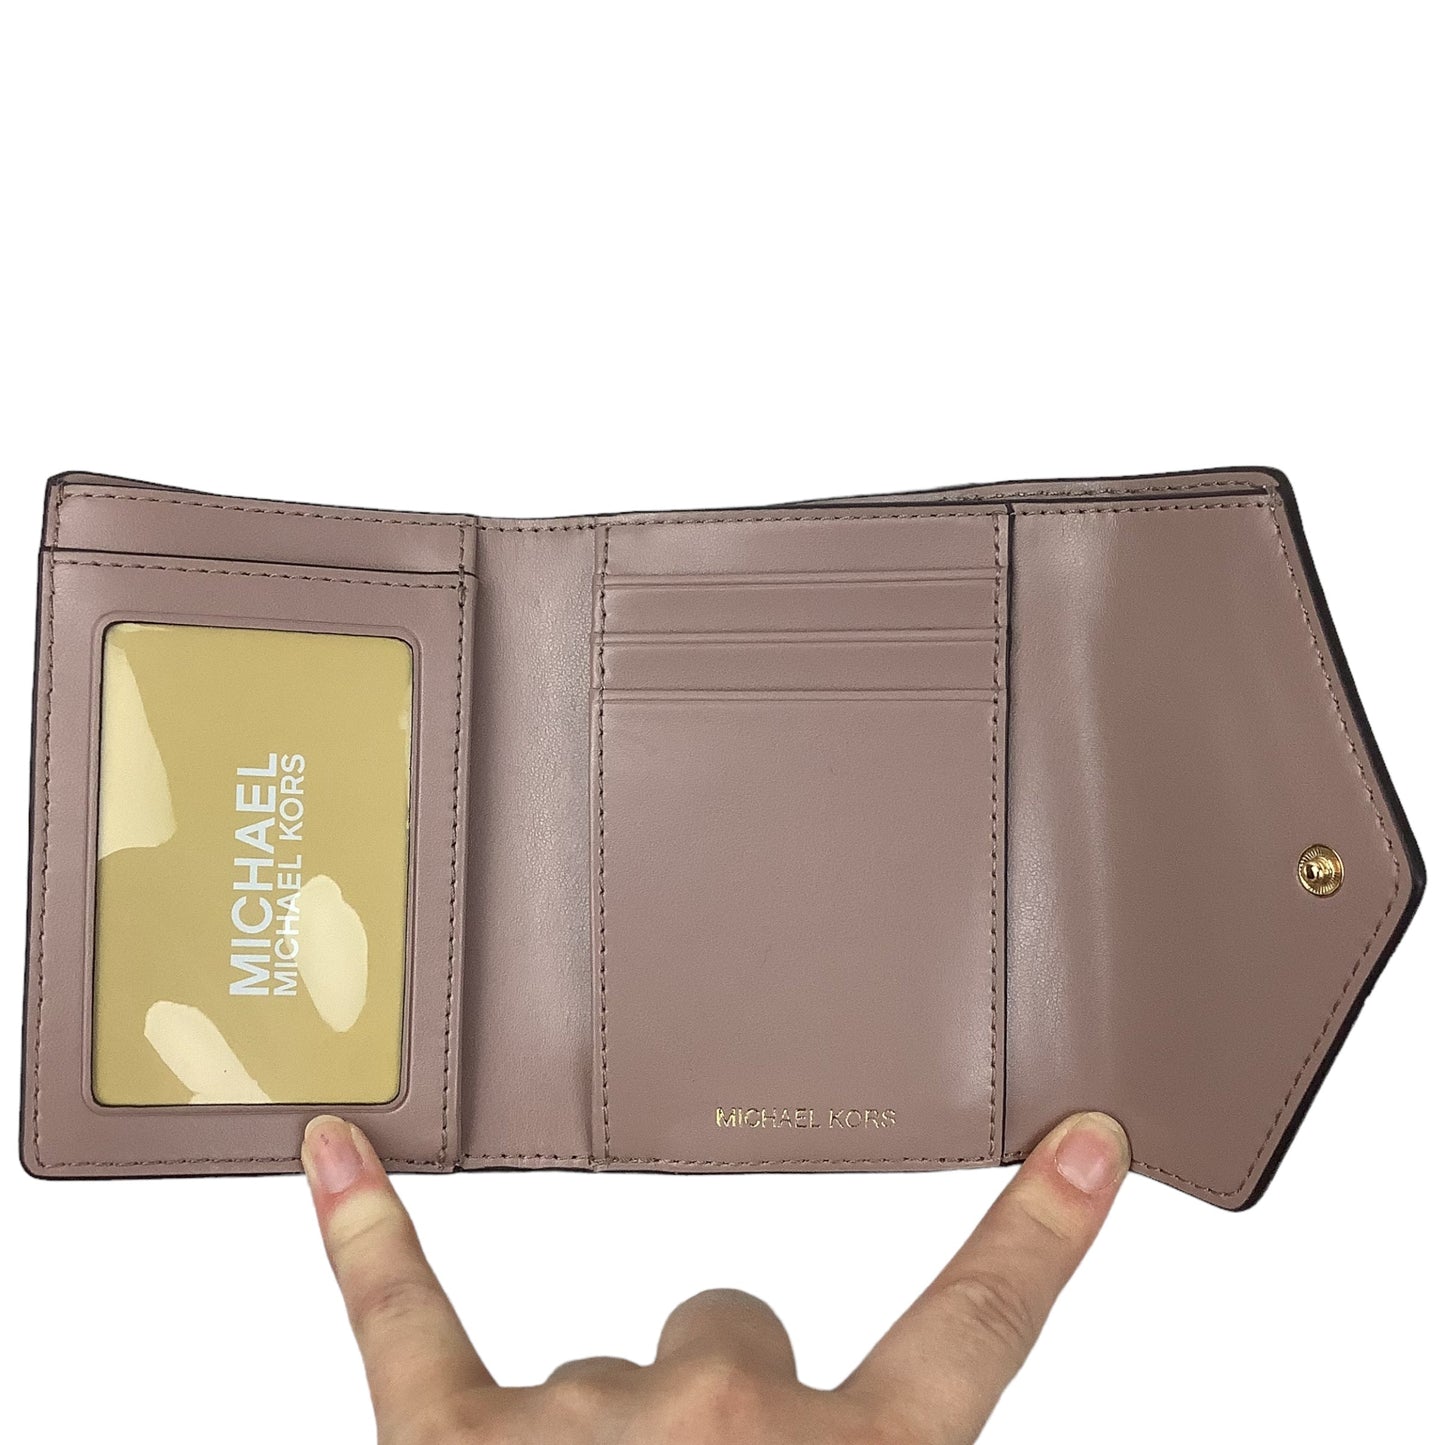 Wallet Designer Michael Kors, Size Small